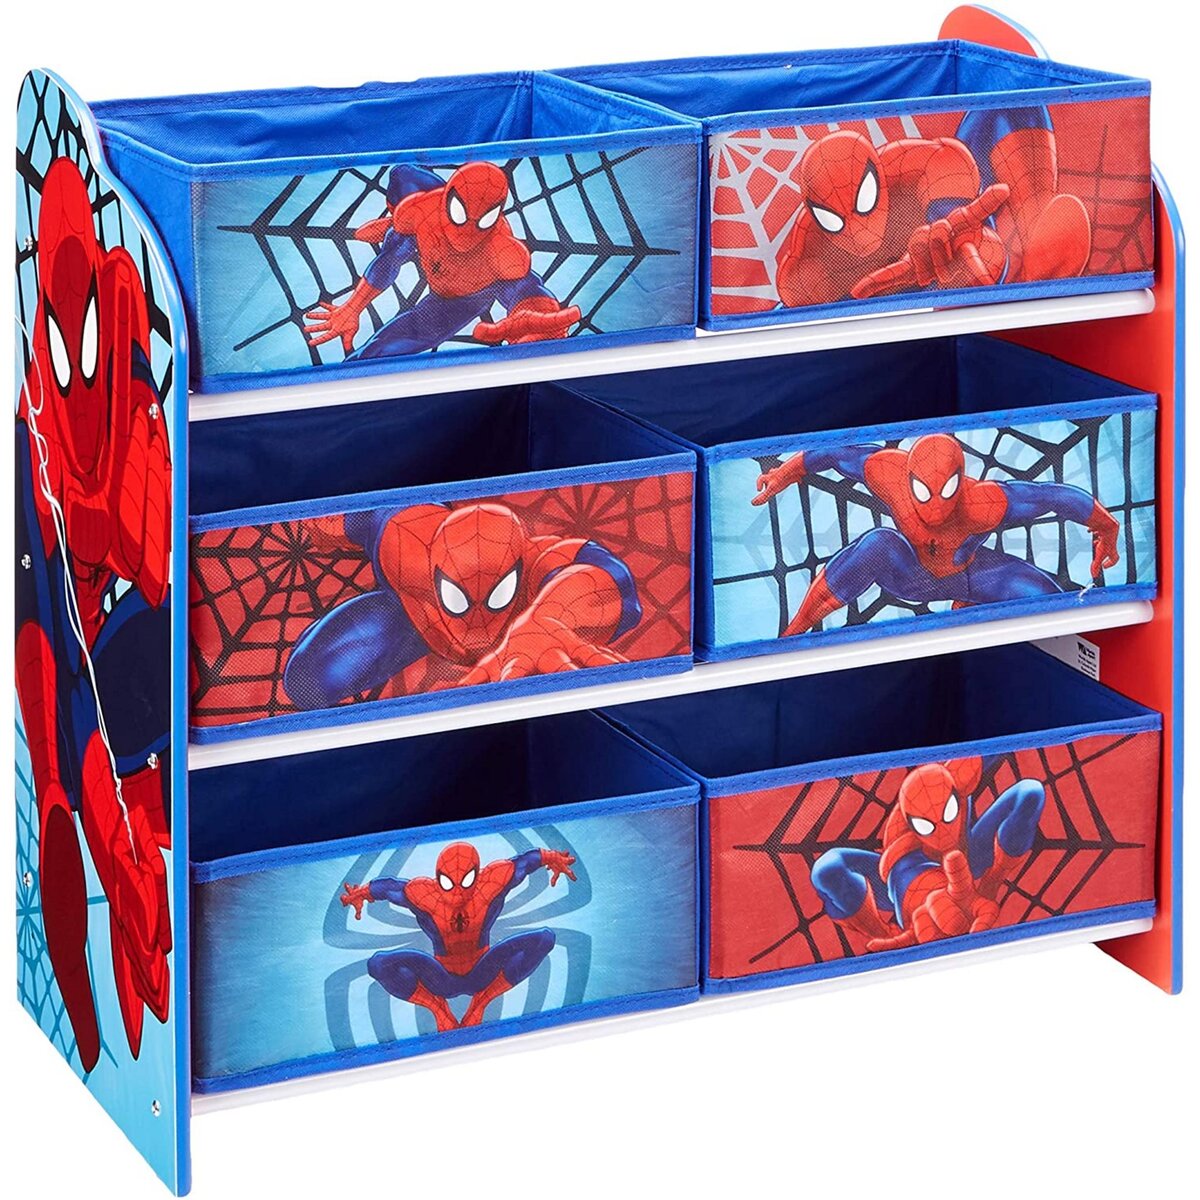 MOOSE TOYS Spiderman Marvel Meuble de Rangement 6 corbeilles